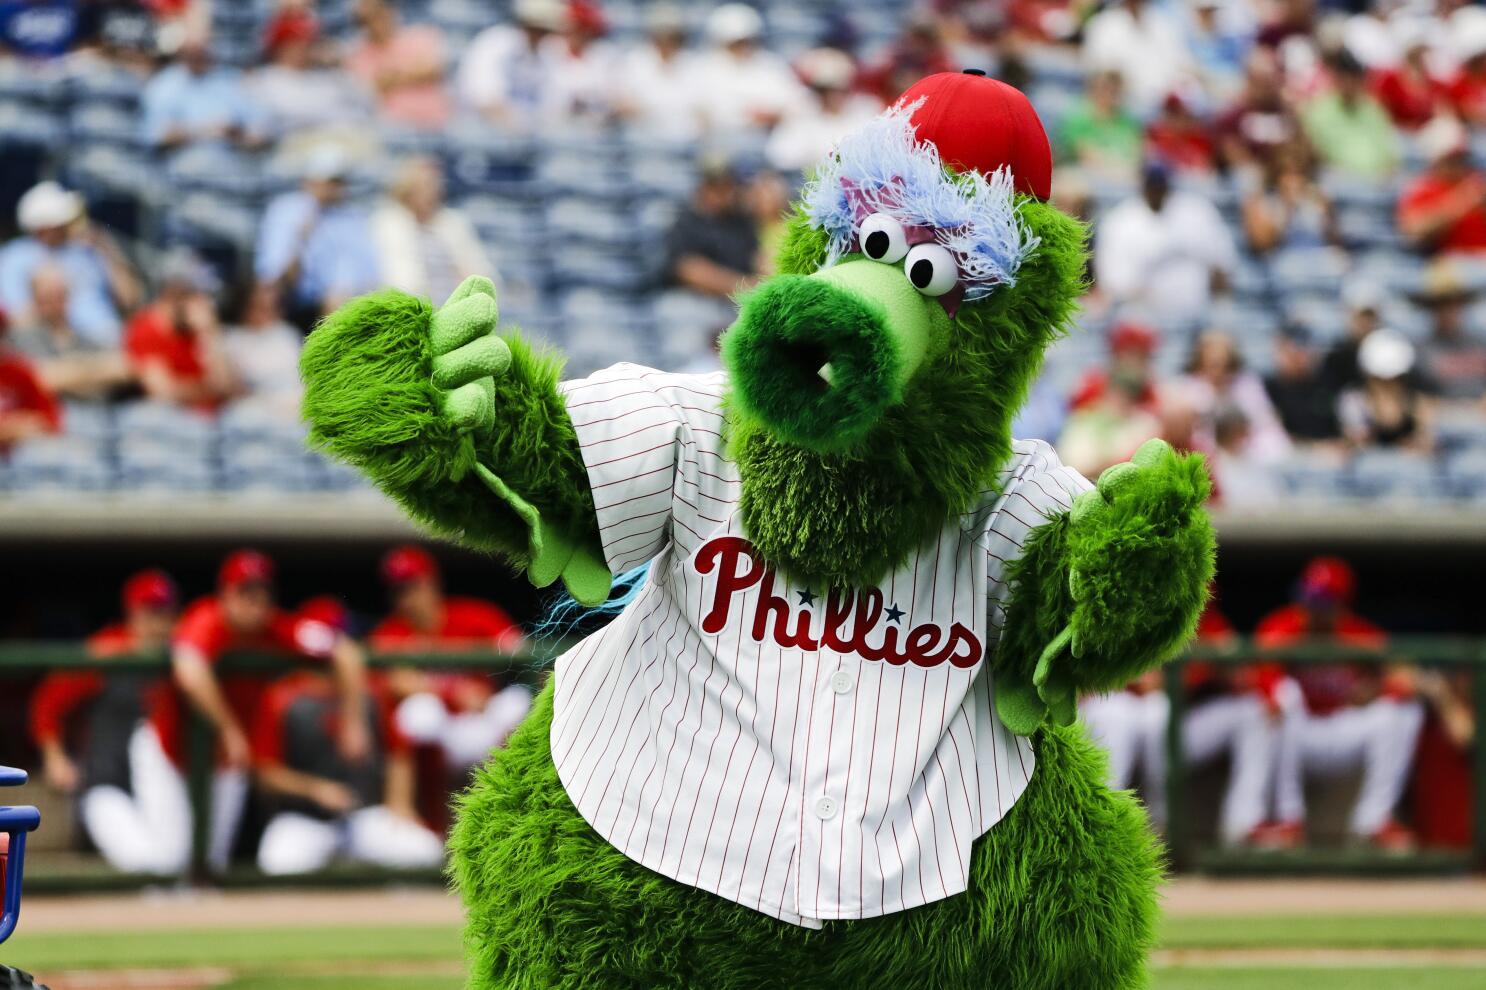 Phillie Phanatic Lawsuit: Mascot's creators reach settlement with team -  6abc Philadelphia